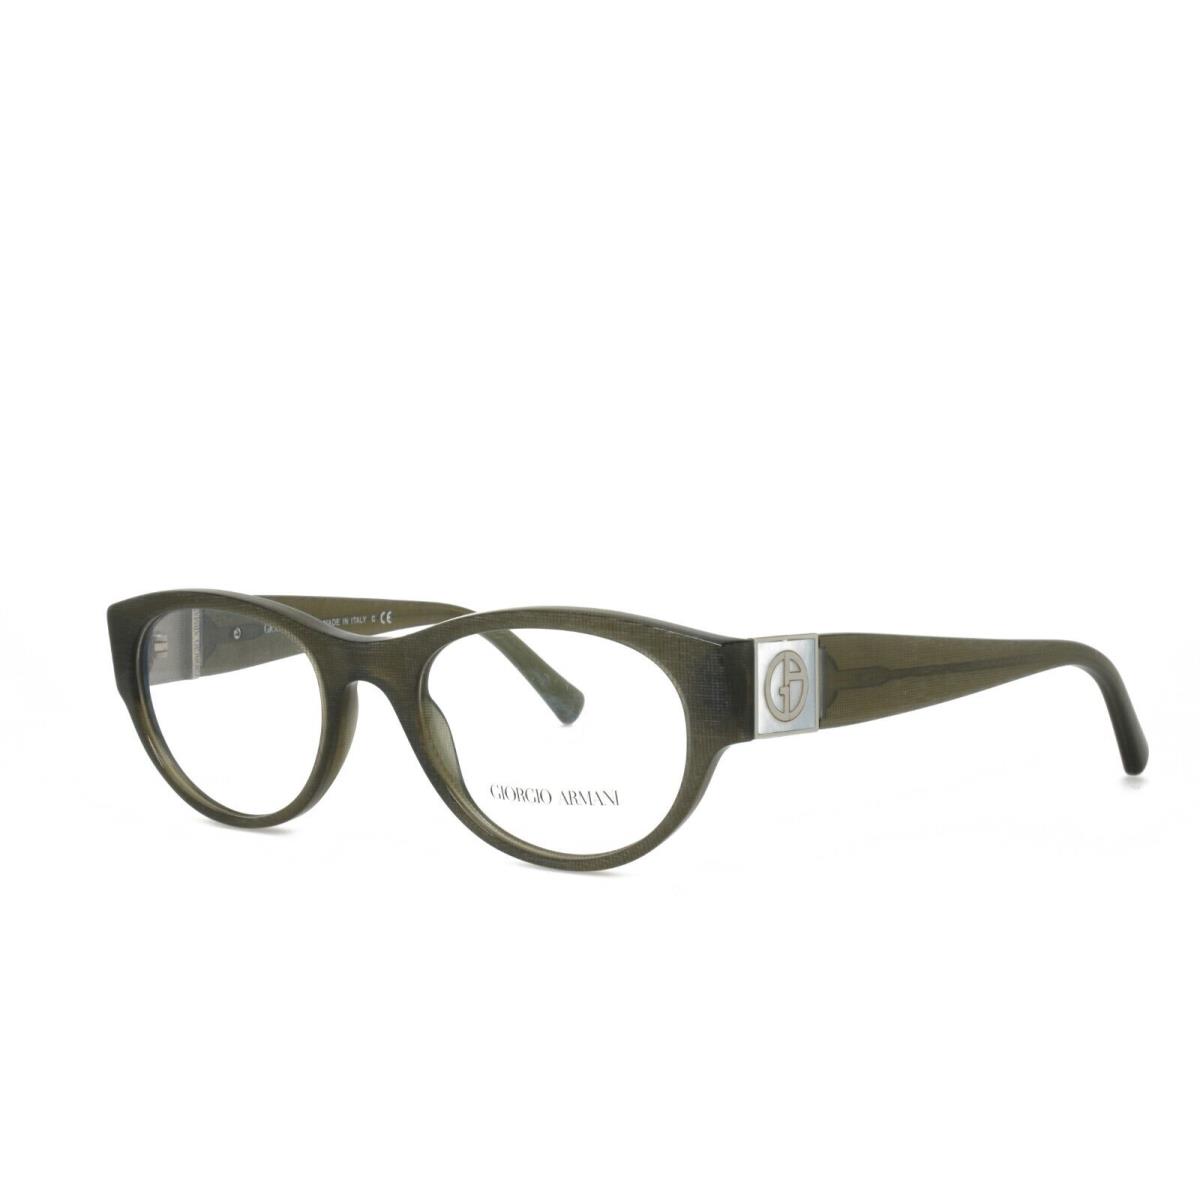 Giorgio Armani 7022H 5156 50-19-140 Gray Eyeglasses Frames